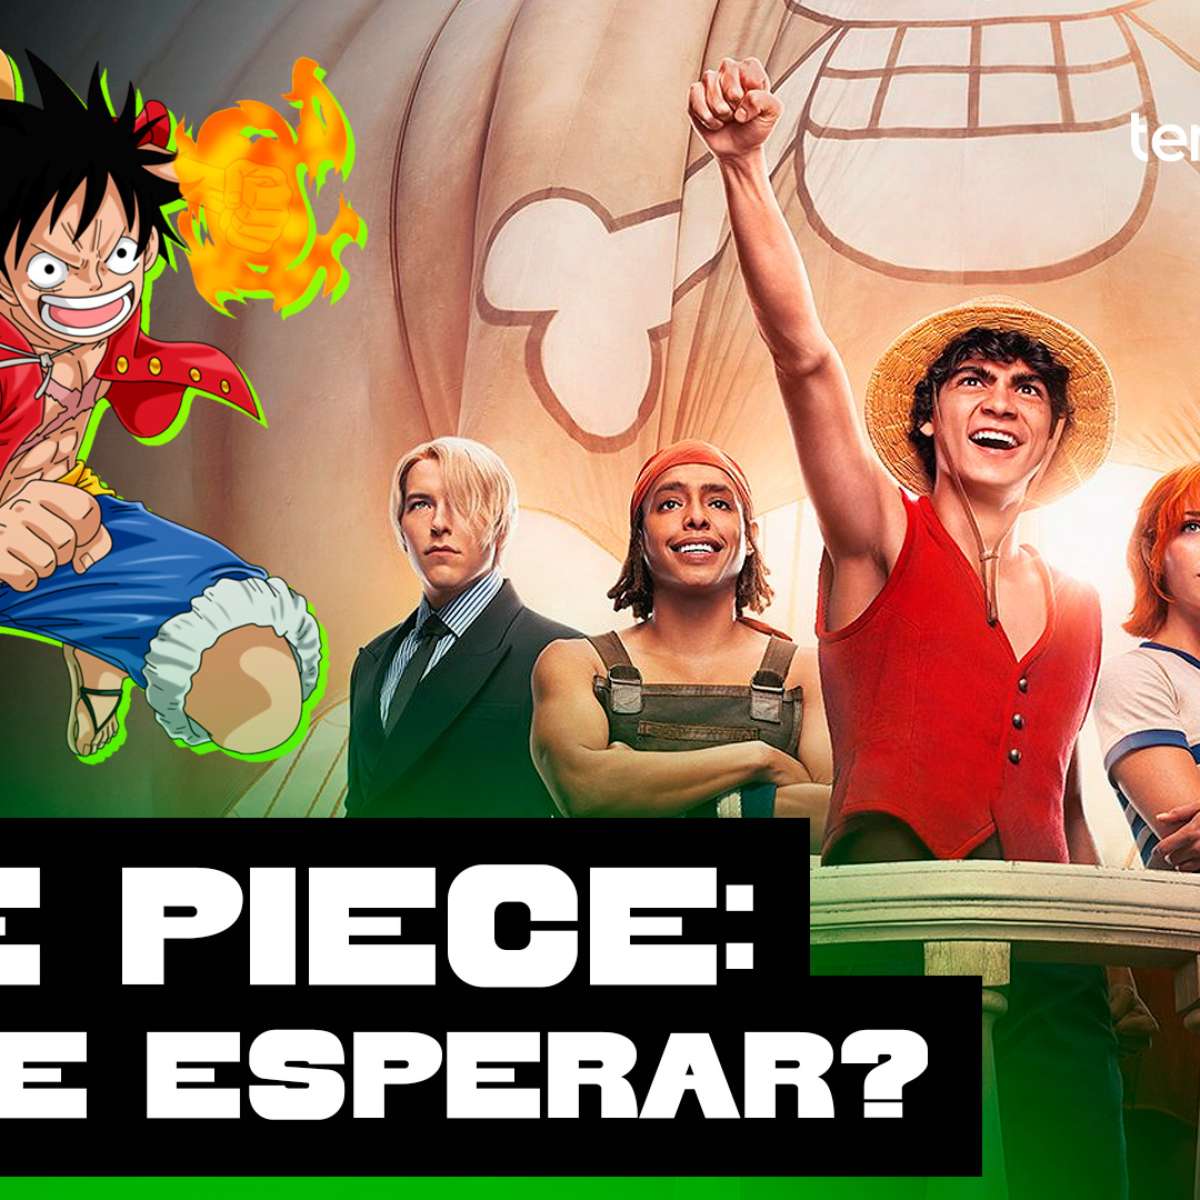  Filme One Piece Z estreia na Netflix